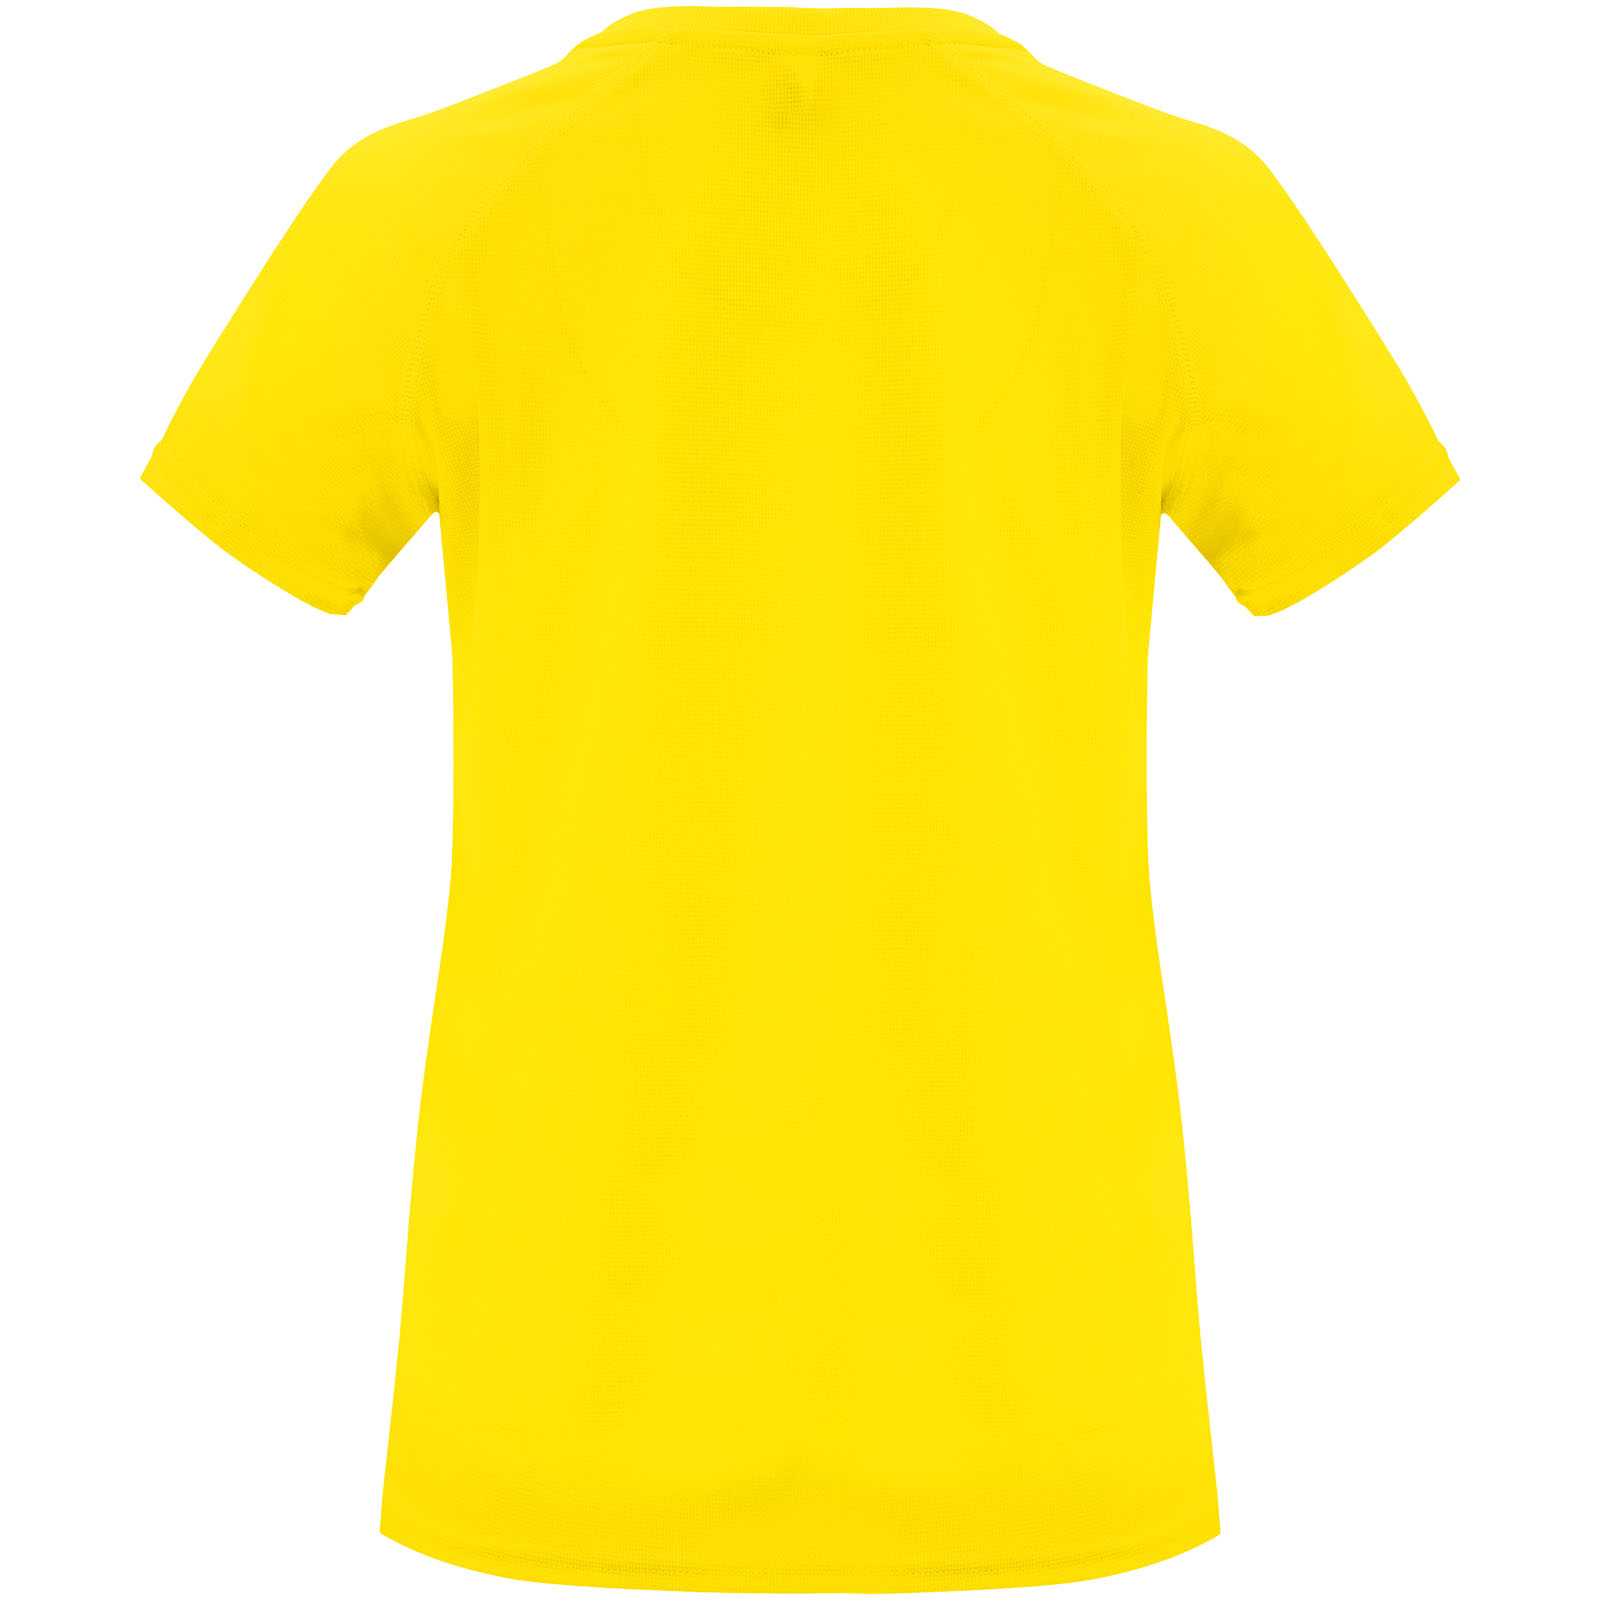 Advertising T-shirts - Bahrain short sleeve women's sports t-shirt - 1